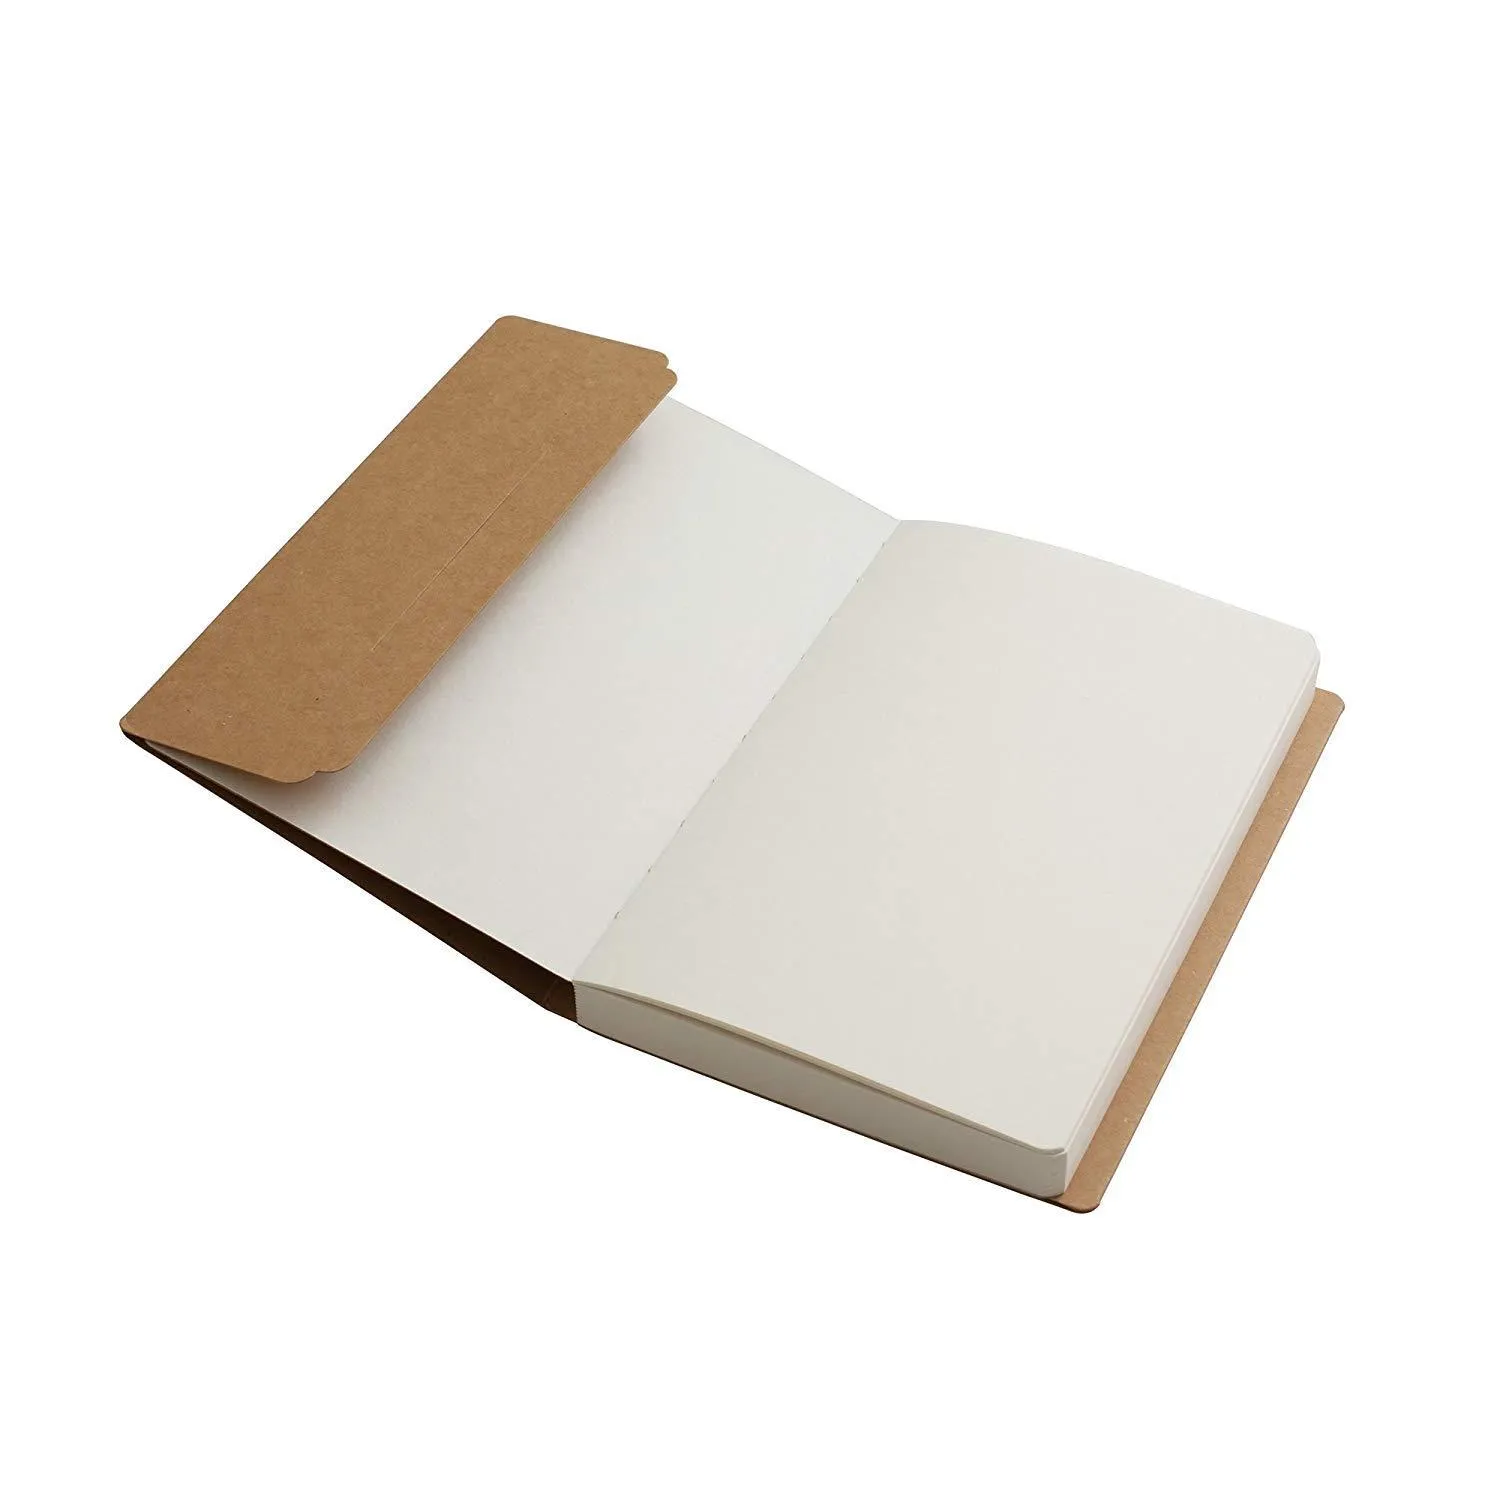 Libro da disegno con copertina kraft bianca, 100 g, in carta piena di legno, 112 fogli/224 pagine, 140 x 210 mm, carta kraft da 350 g/m².